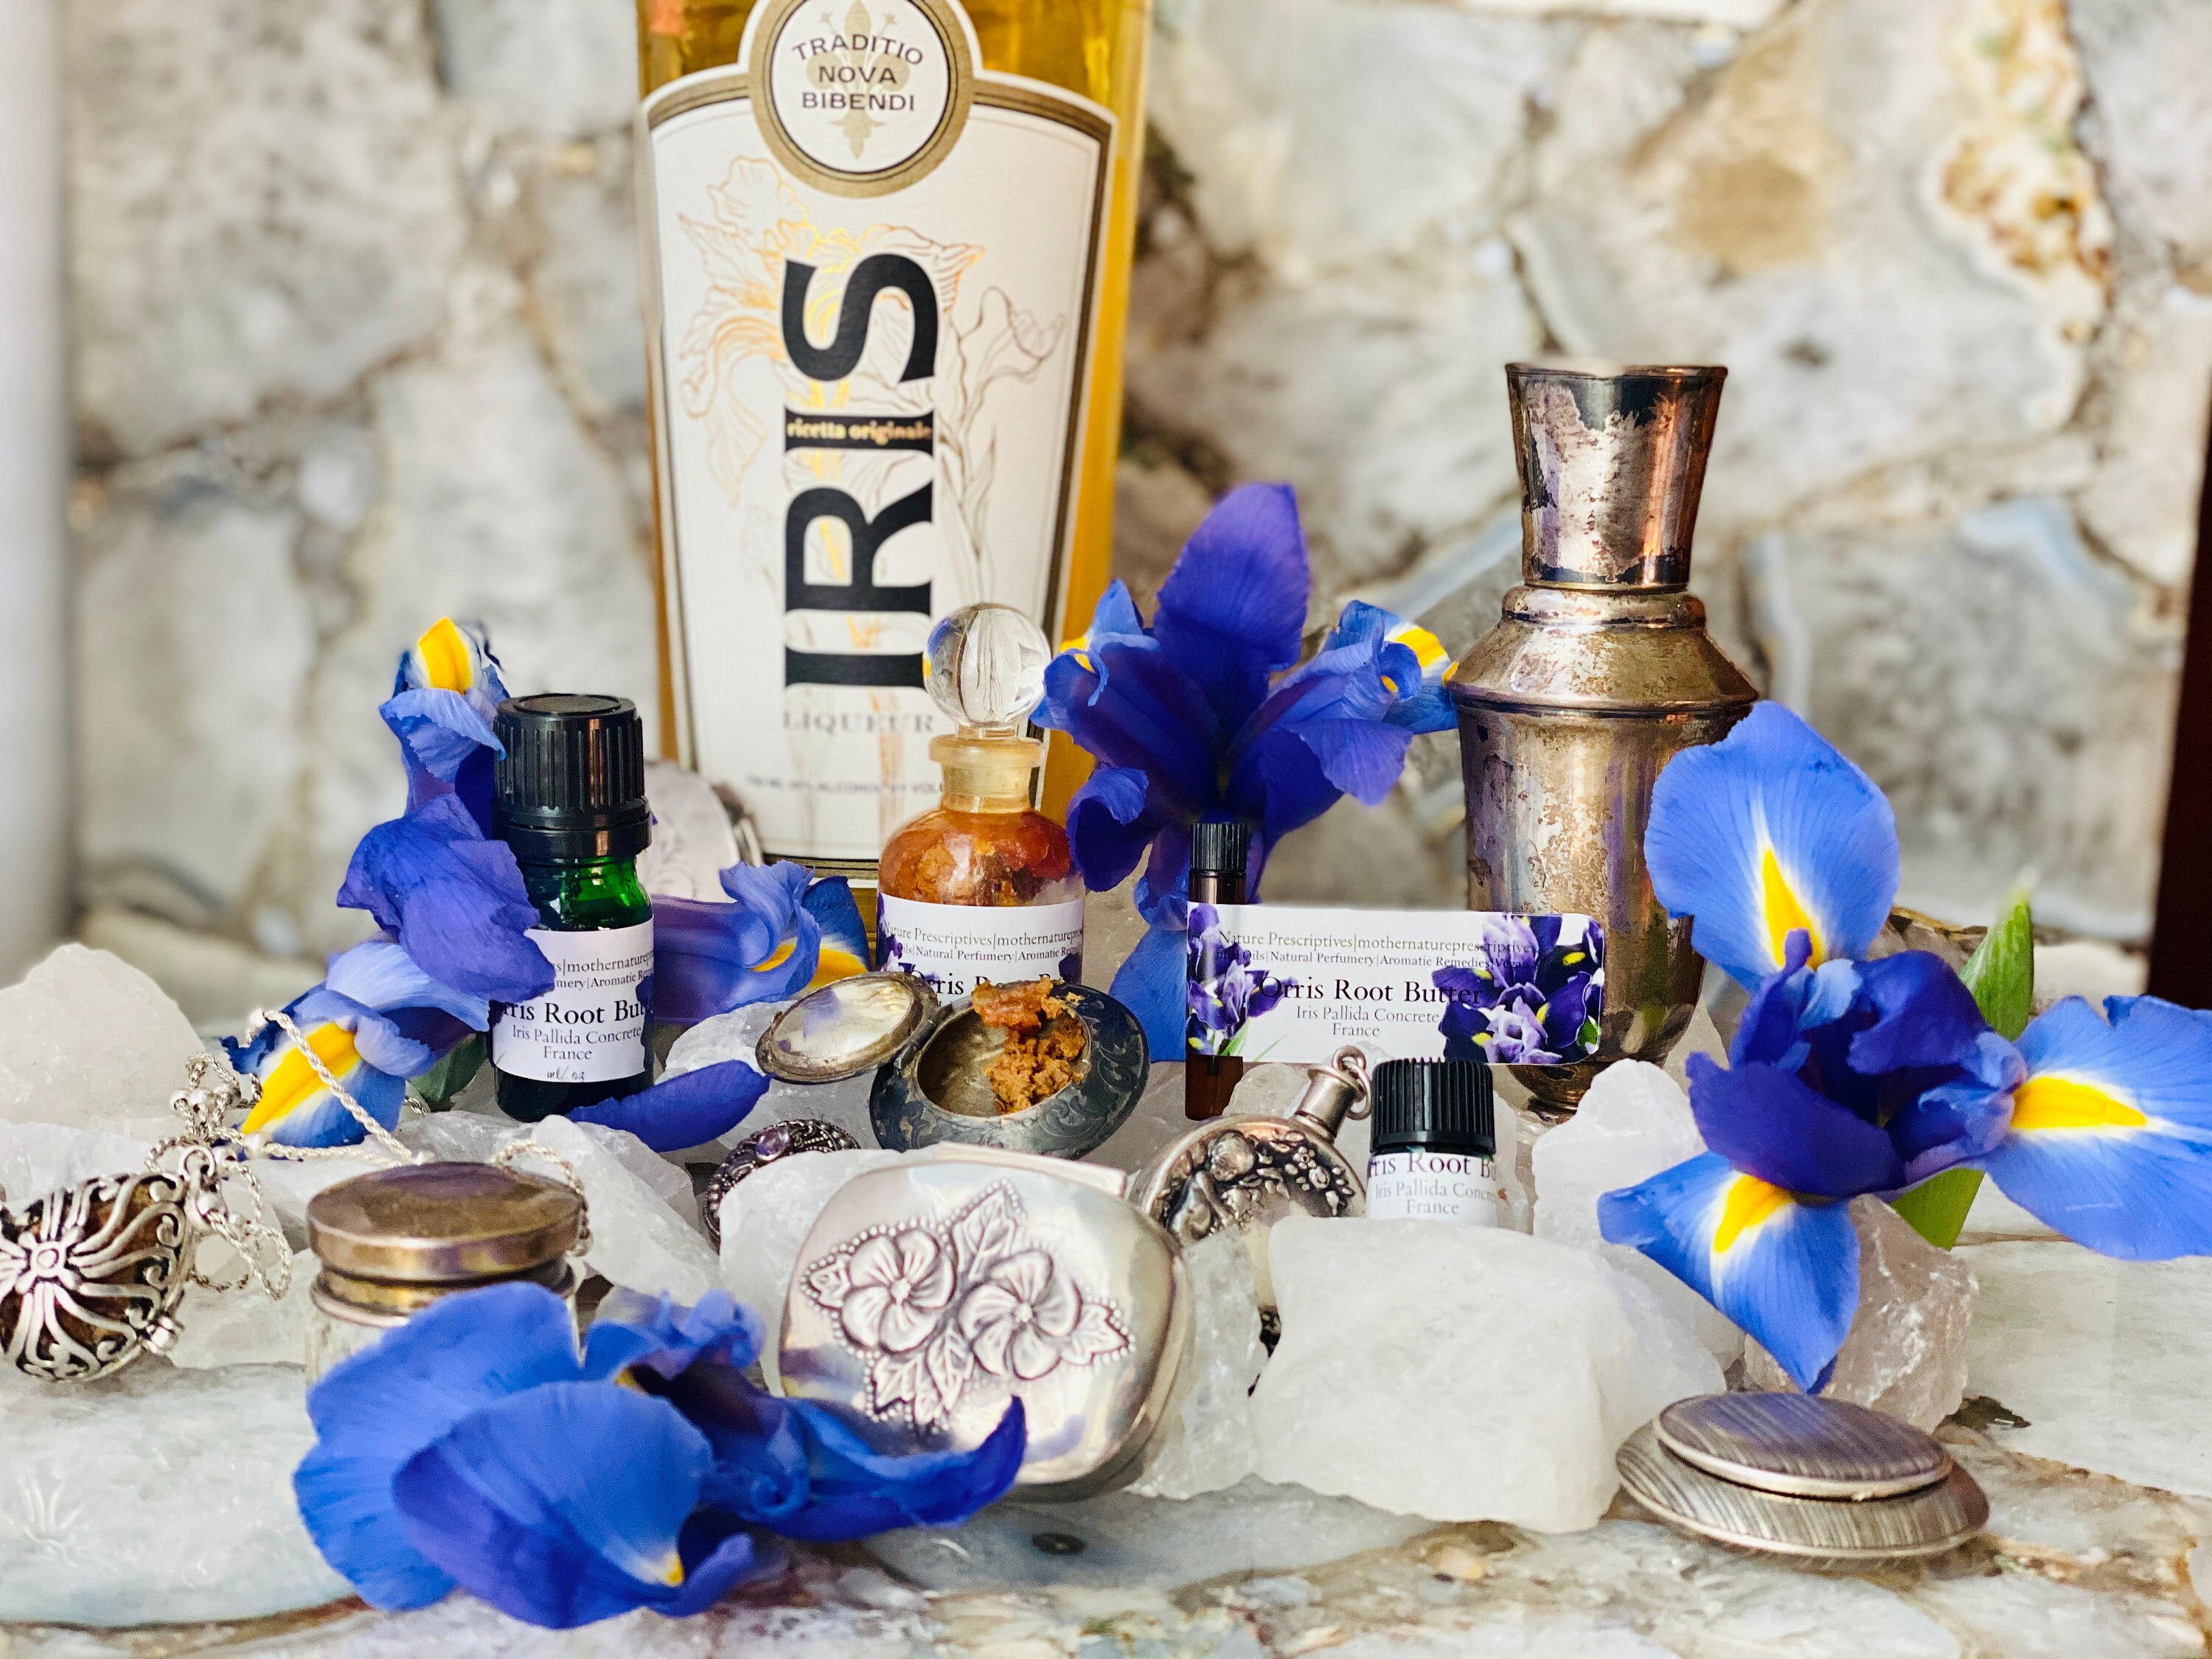 Iris / Orris perfume ingredient – Wikiparfum